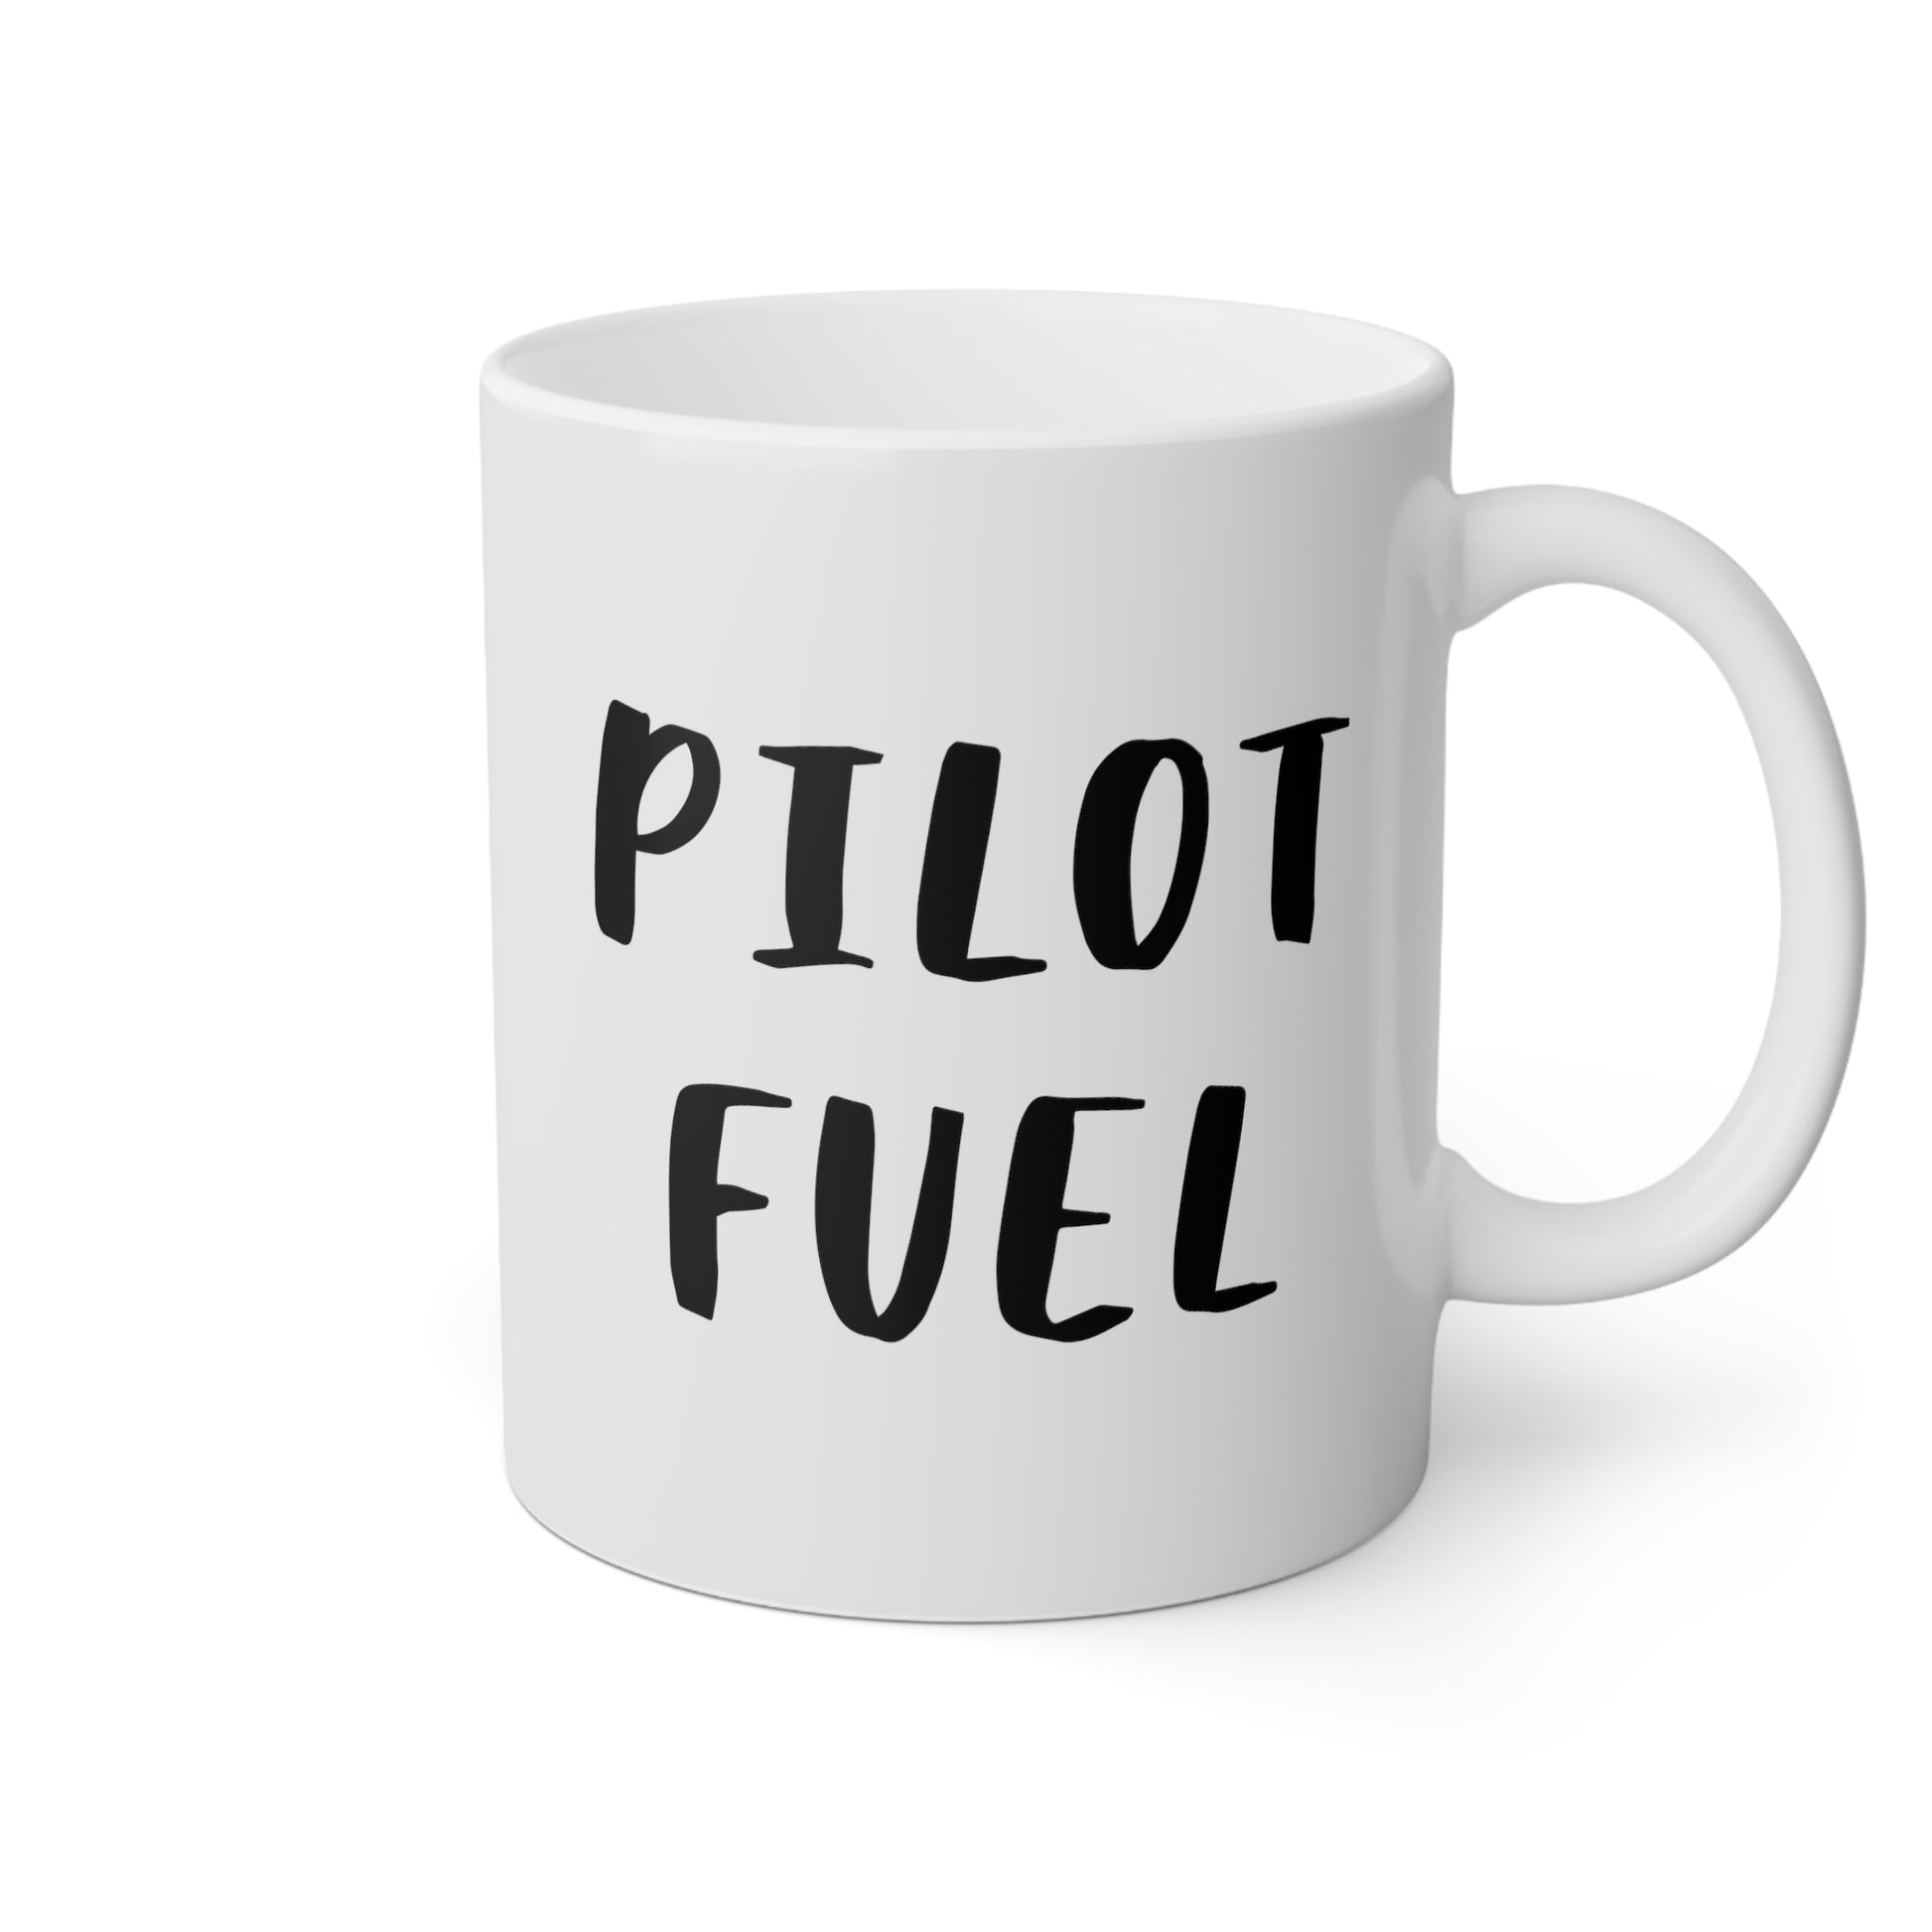 Pilot Fuel 11oz white funny large coffee mug gift for world's best pilot present waveywares wavey wares wavywares wavy wares